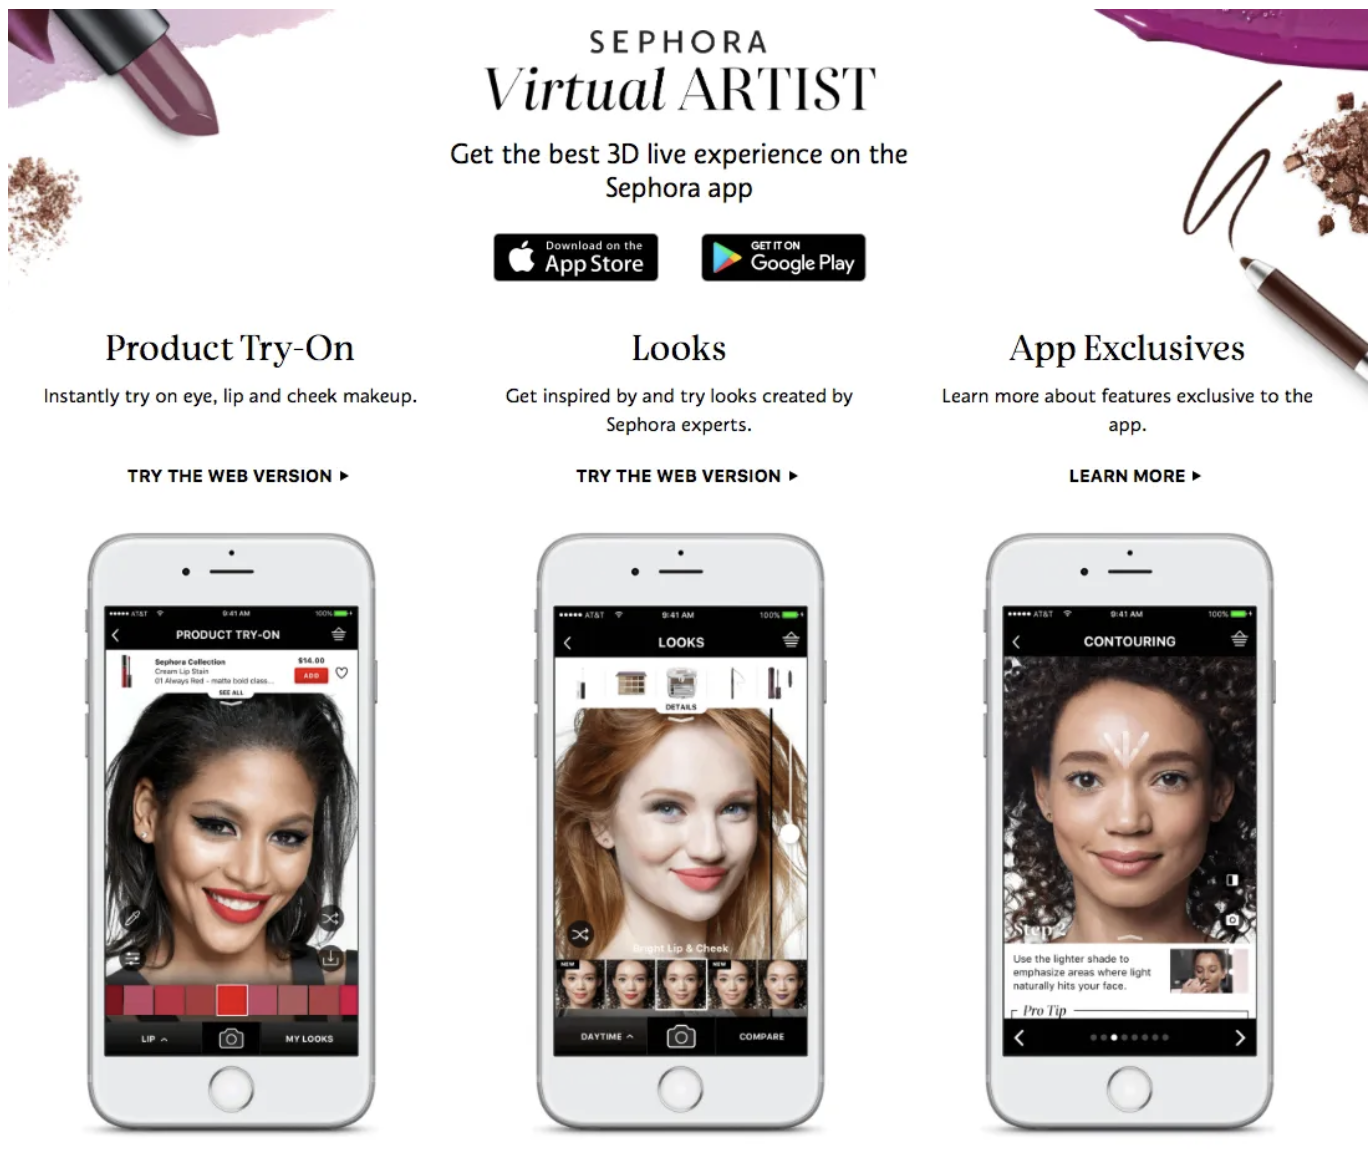 Sephora Virtual Assist powered by Conversational AI